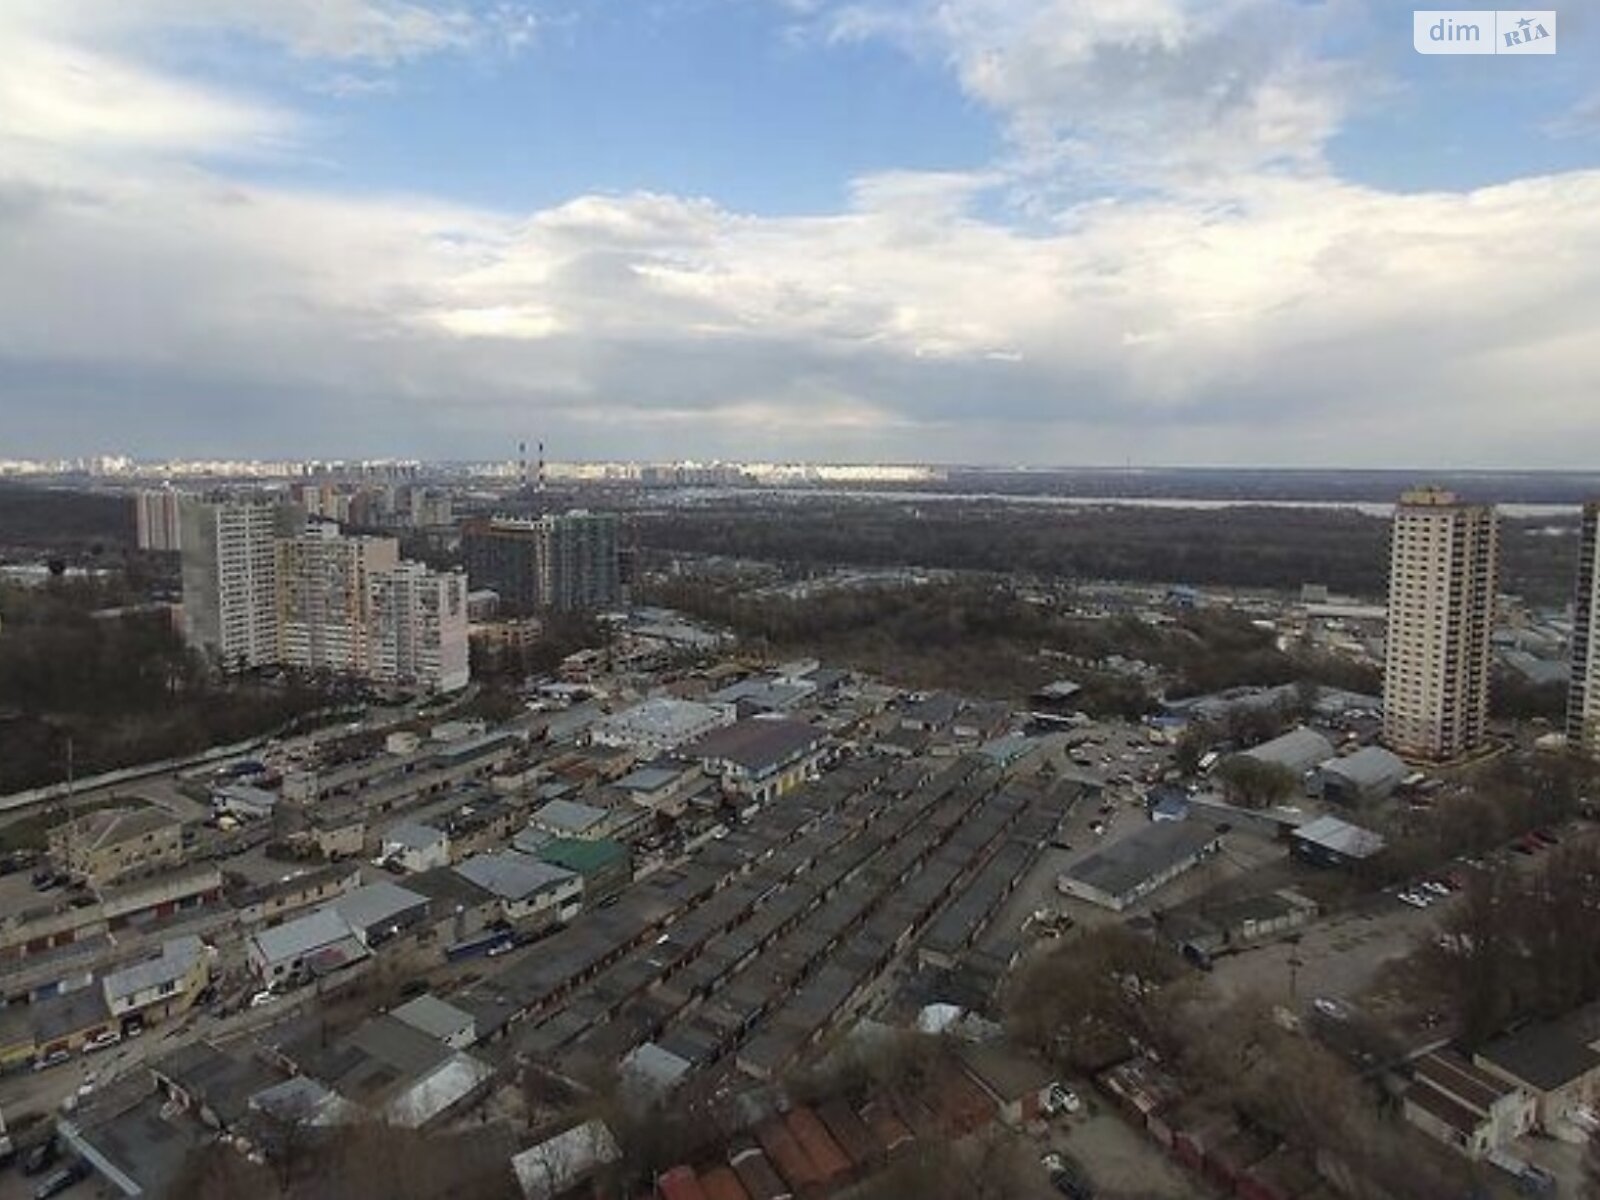 Продаж однокімнатної квартири в Києві, на просп. Науки 55А, фото 1